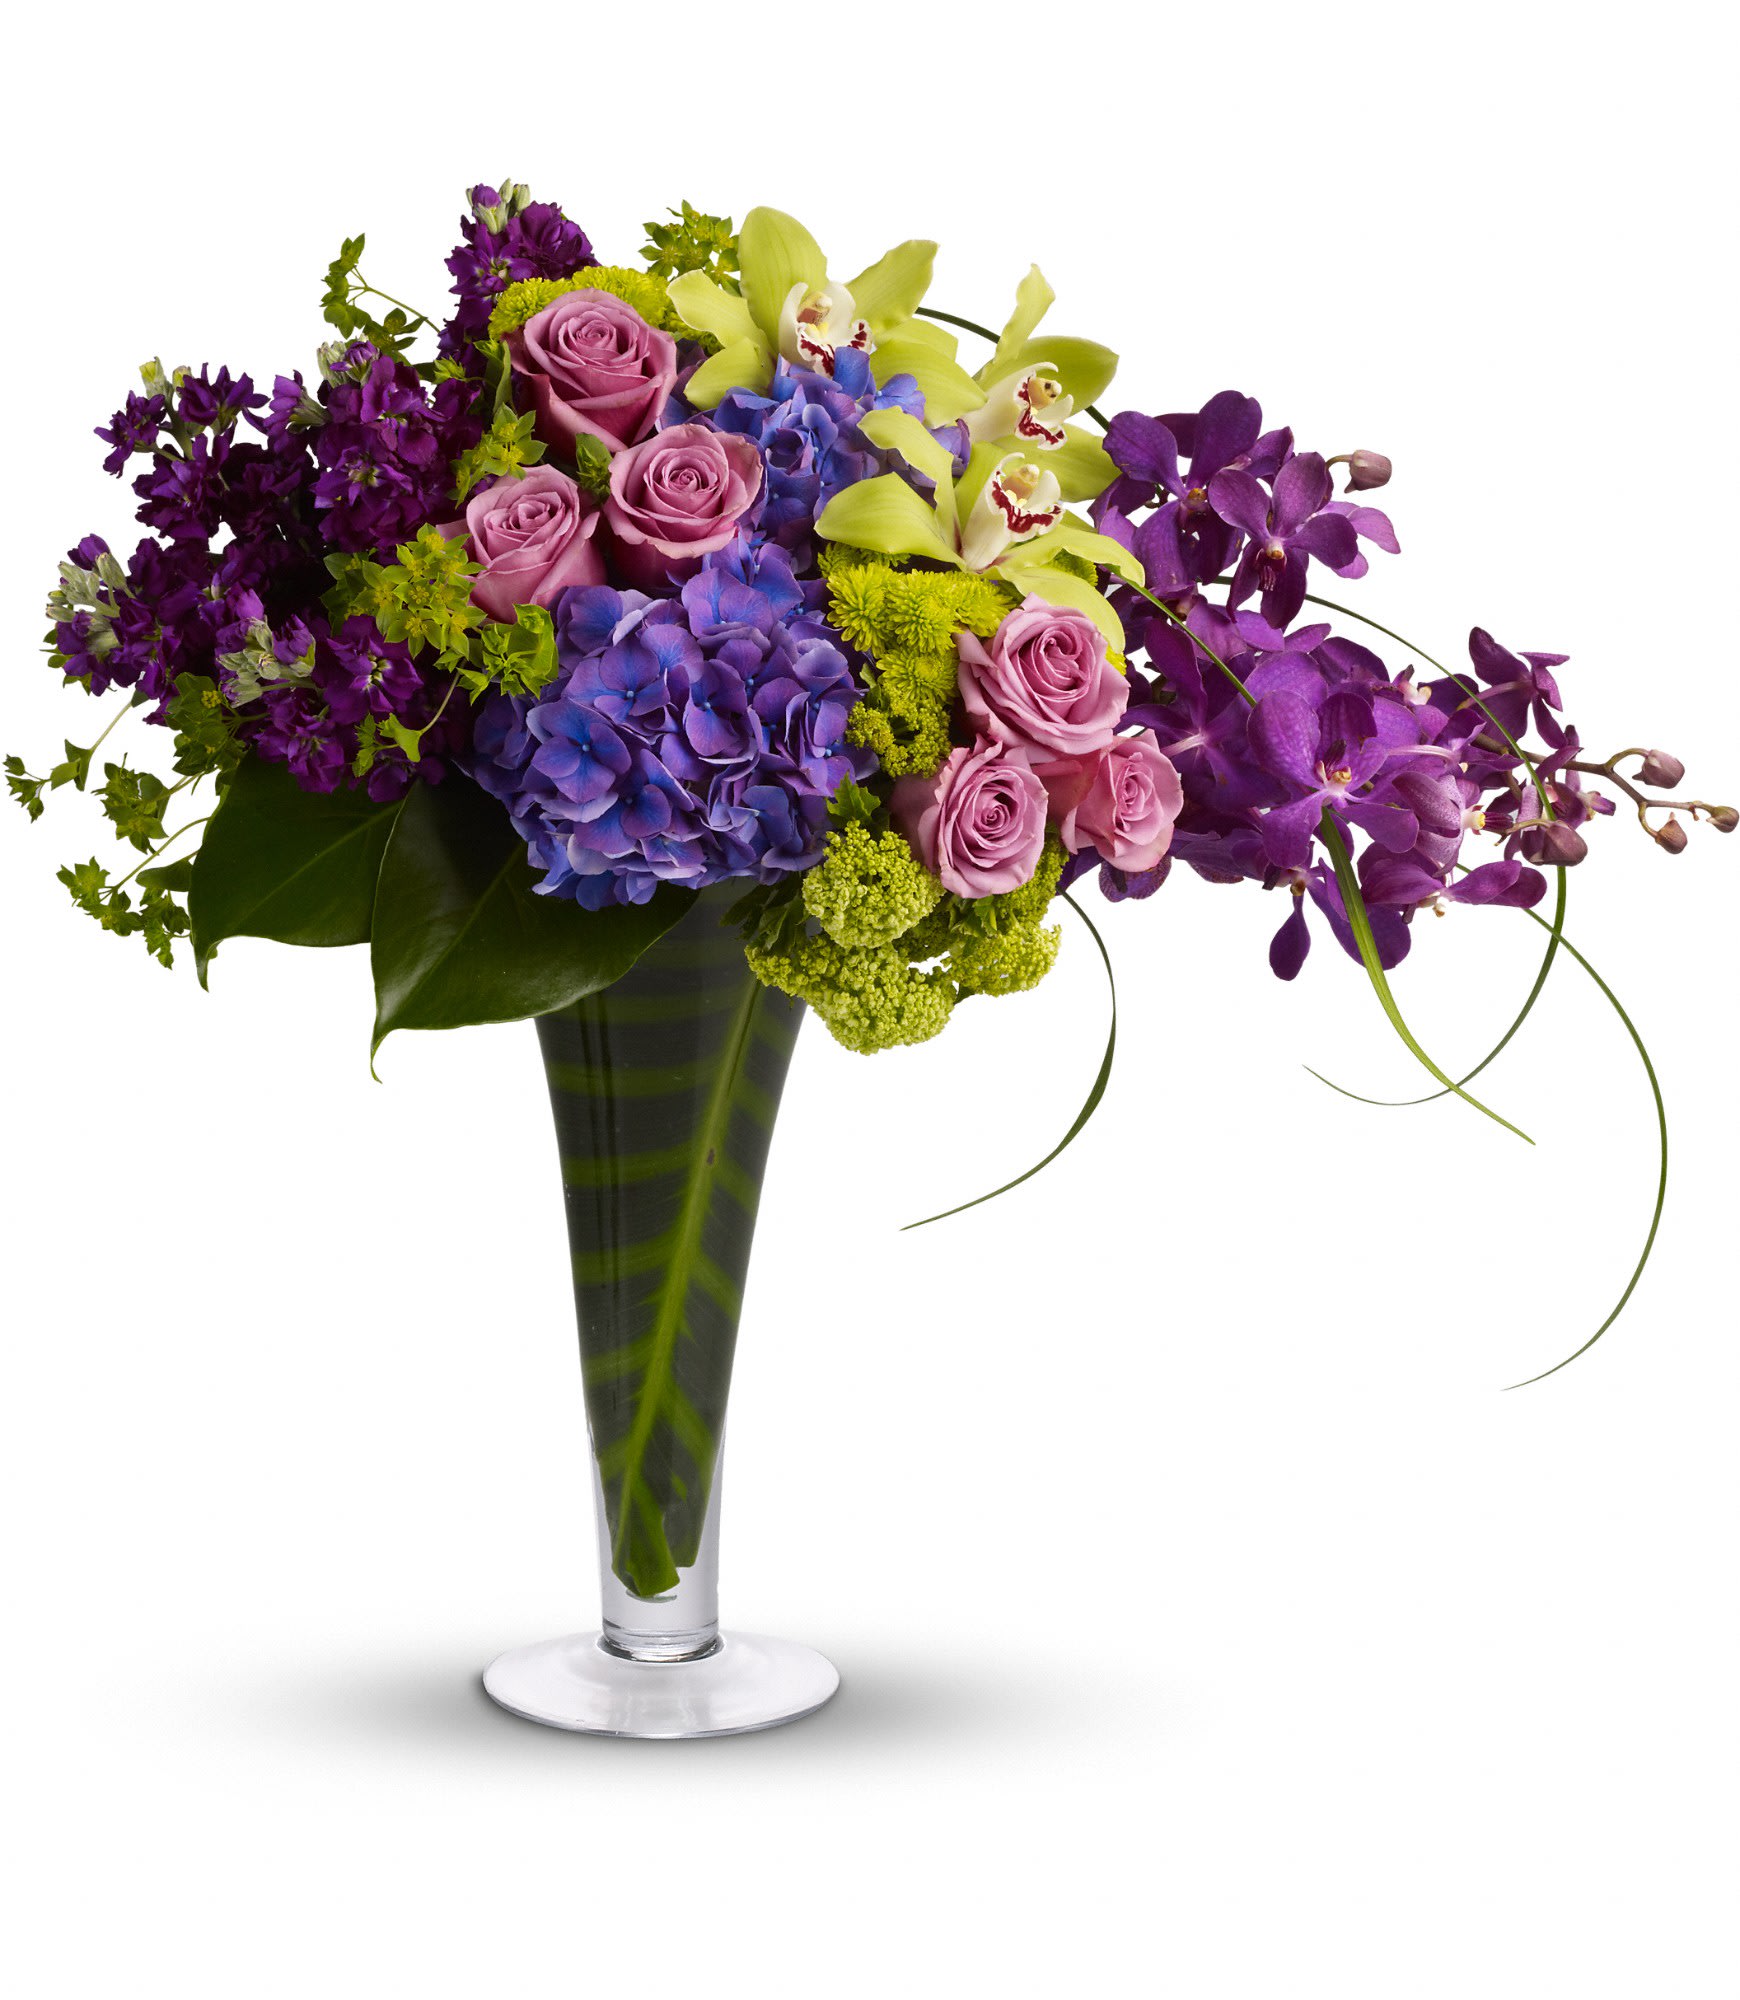 Sada's Flowers - Culver City, CA, US, wholesale flowers online